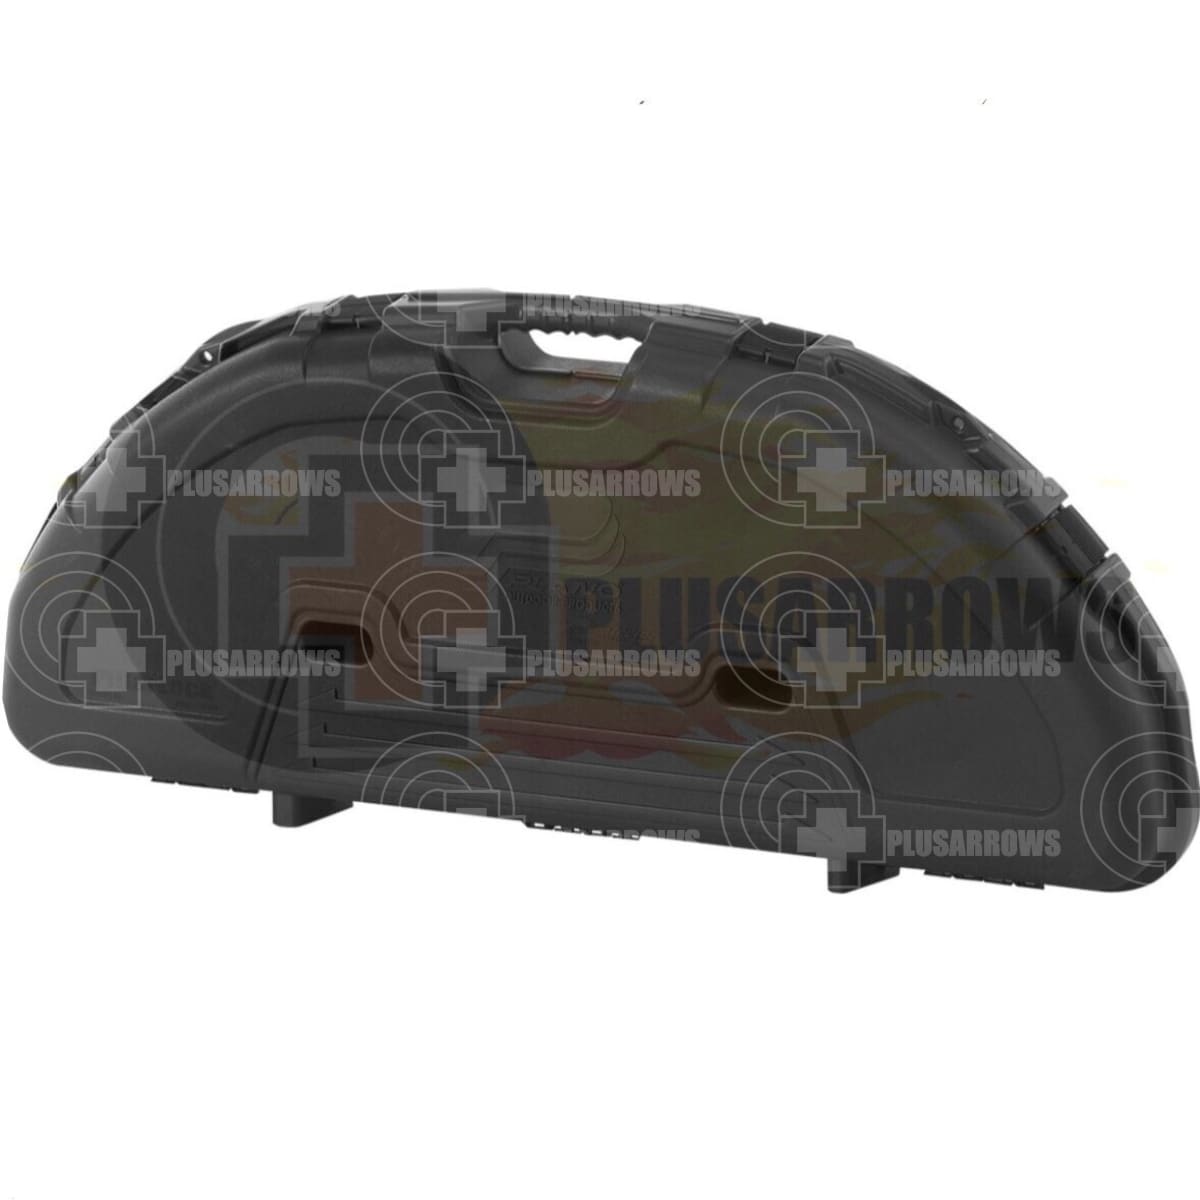 Plano Protector Compact Bow Case – Black